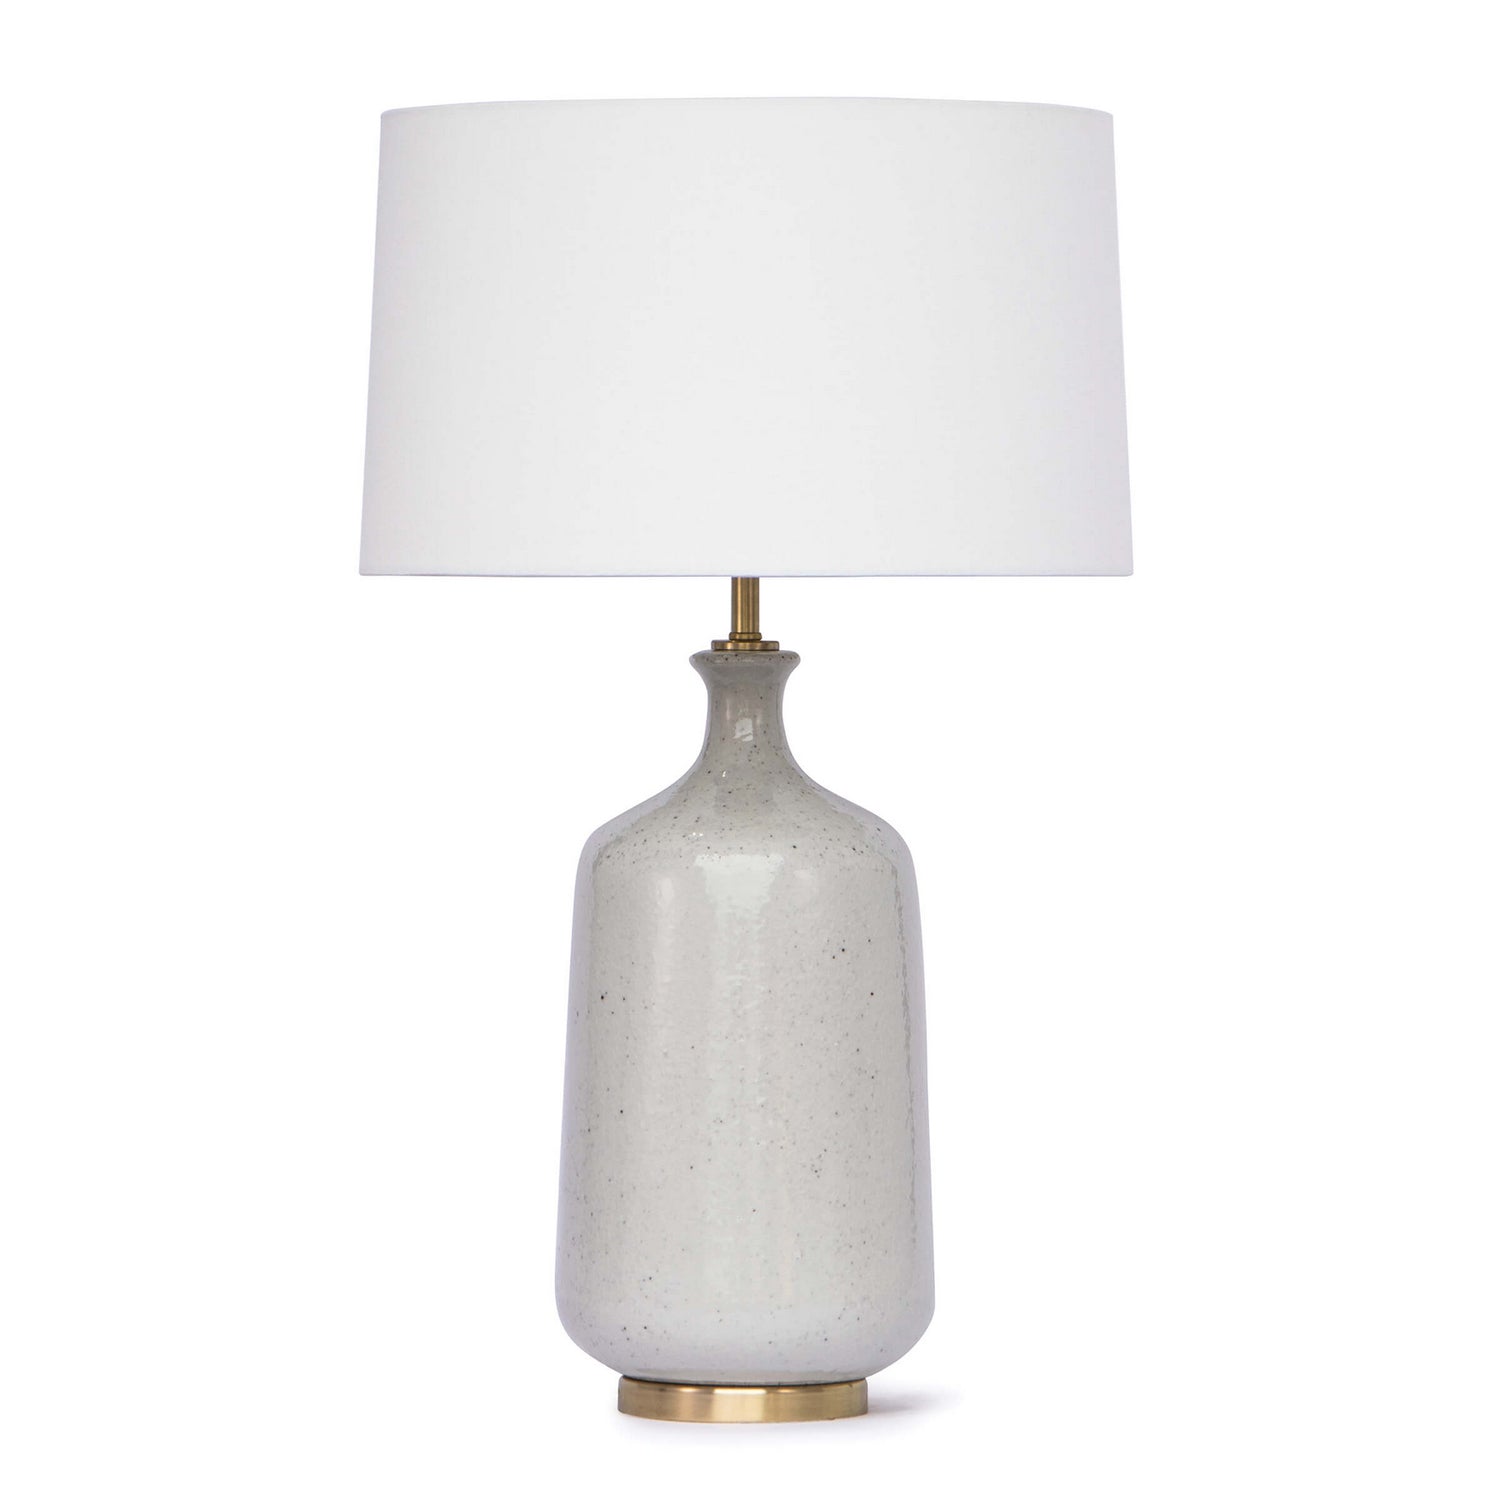 Regina Andrew - 13-1267 - One Light Table Lamp - Glace - White